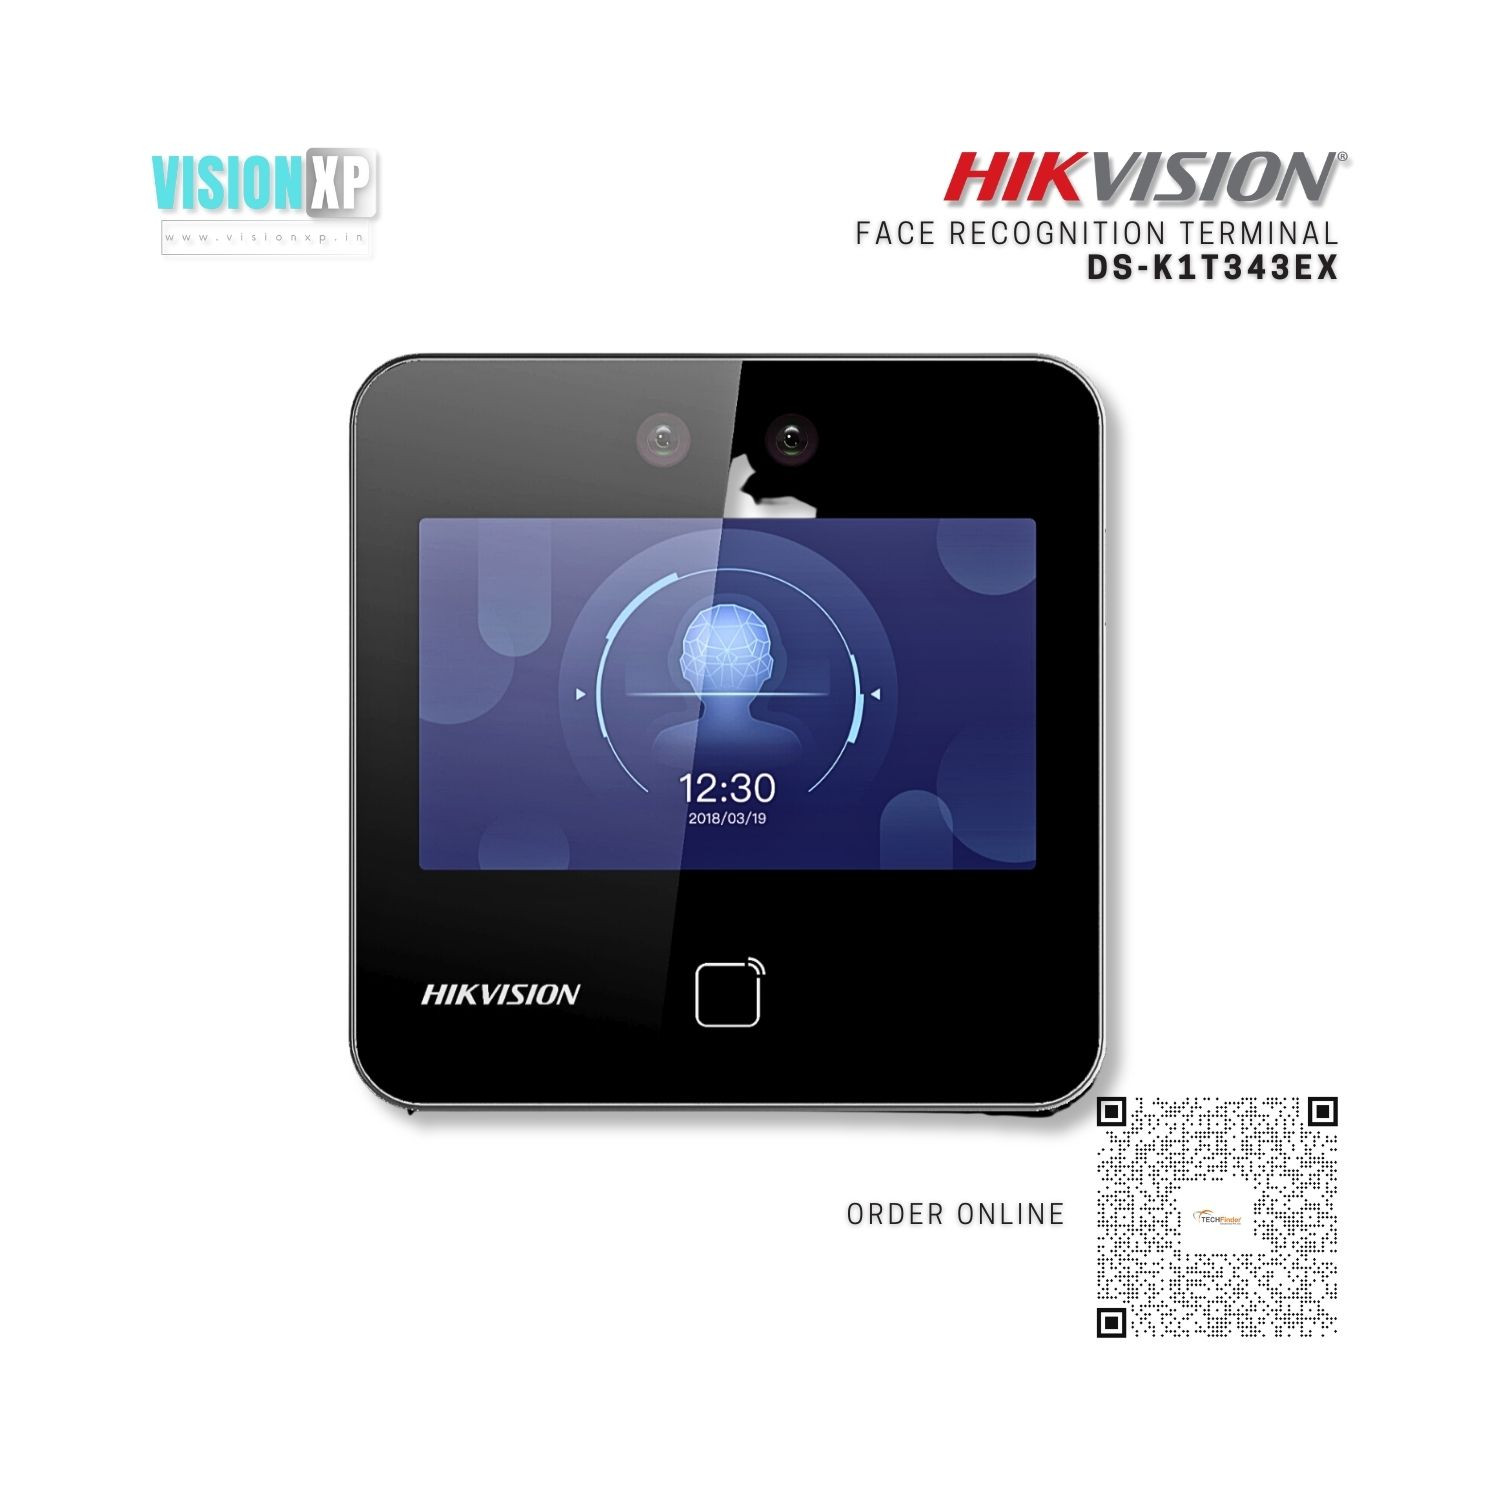 Hikvision DS-K1T343EX Face Recognition Access Control Terminal